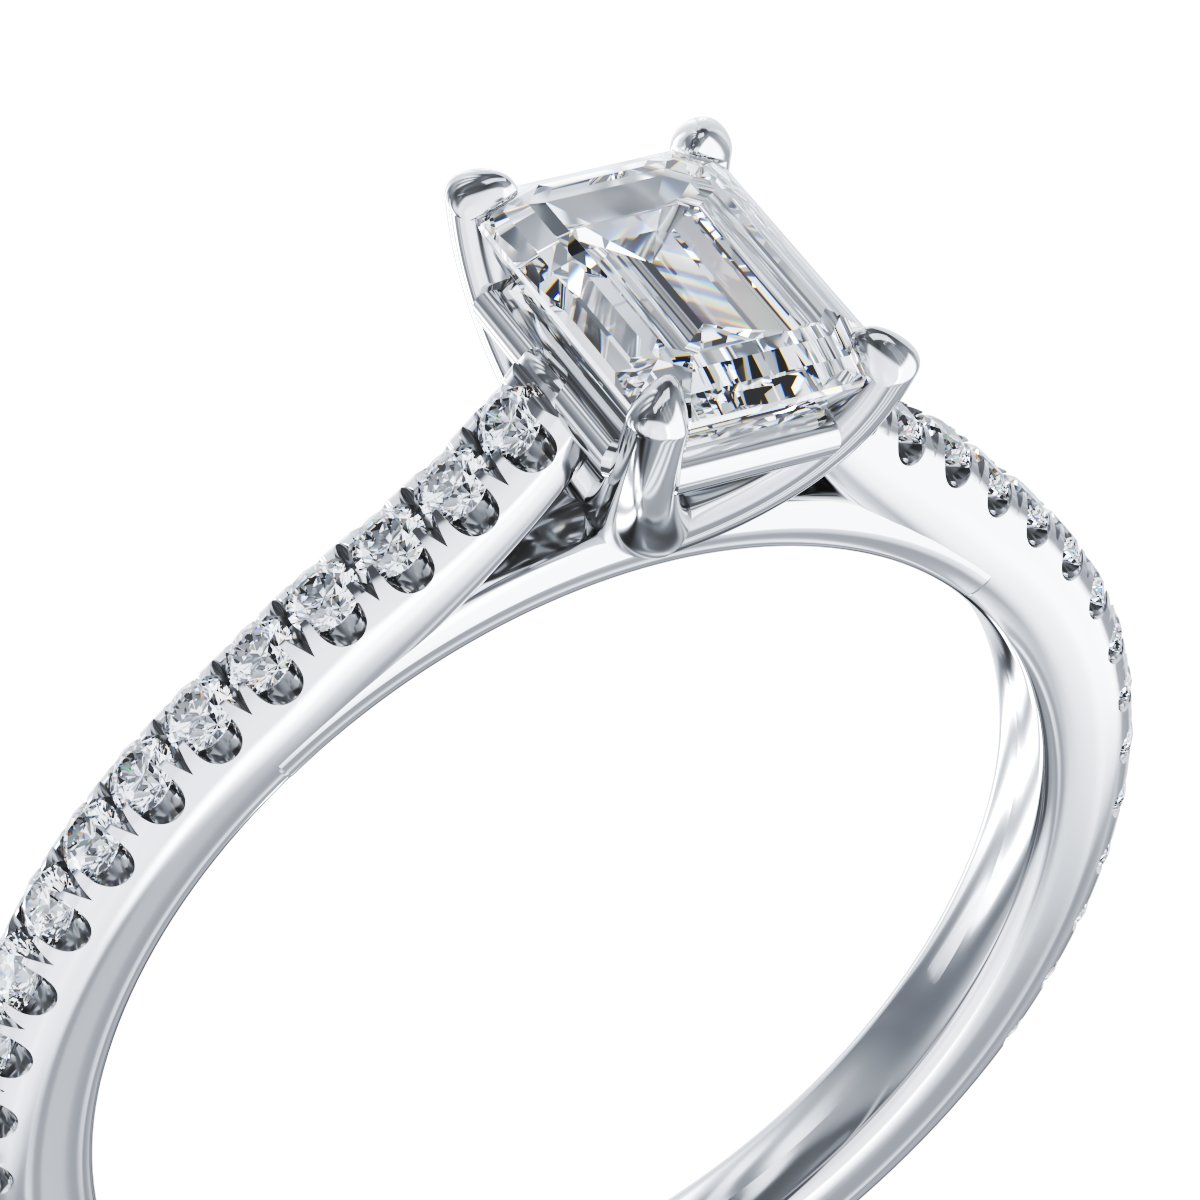 Platinum engagement ring with 0.61ct diamond and 0.2ct diamonds